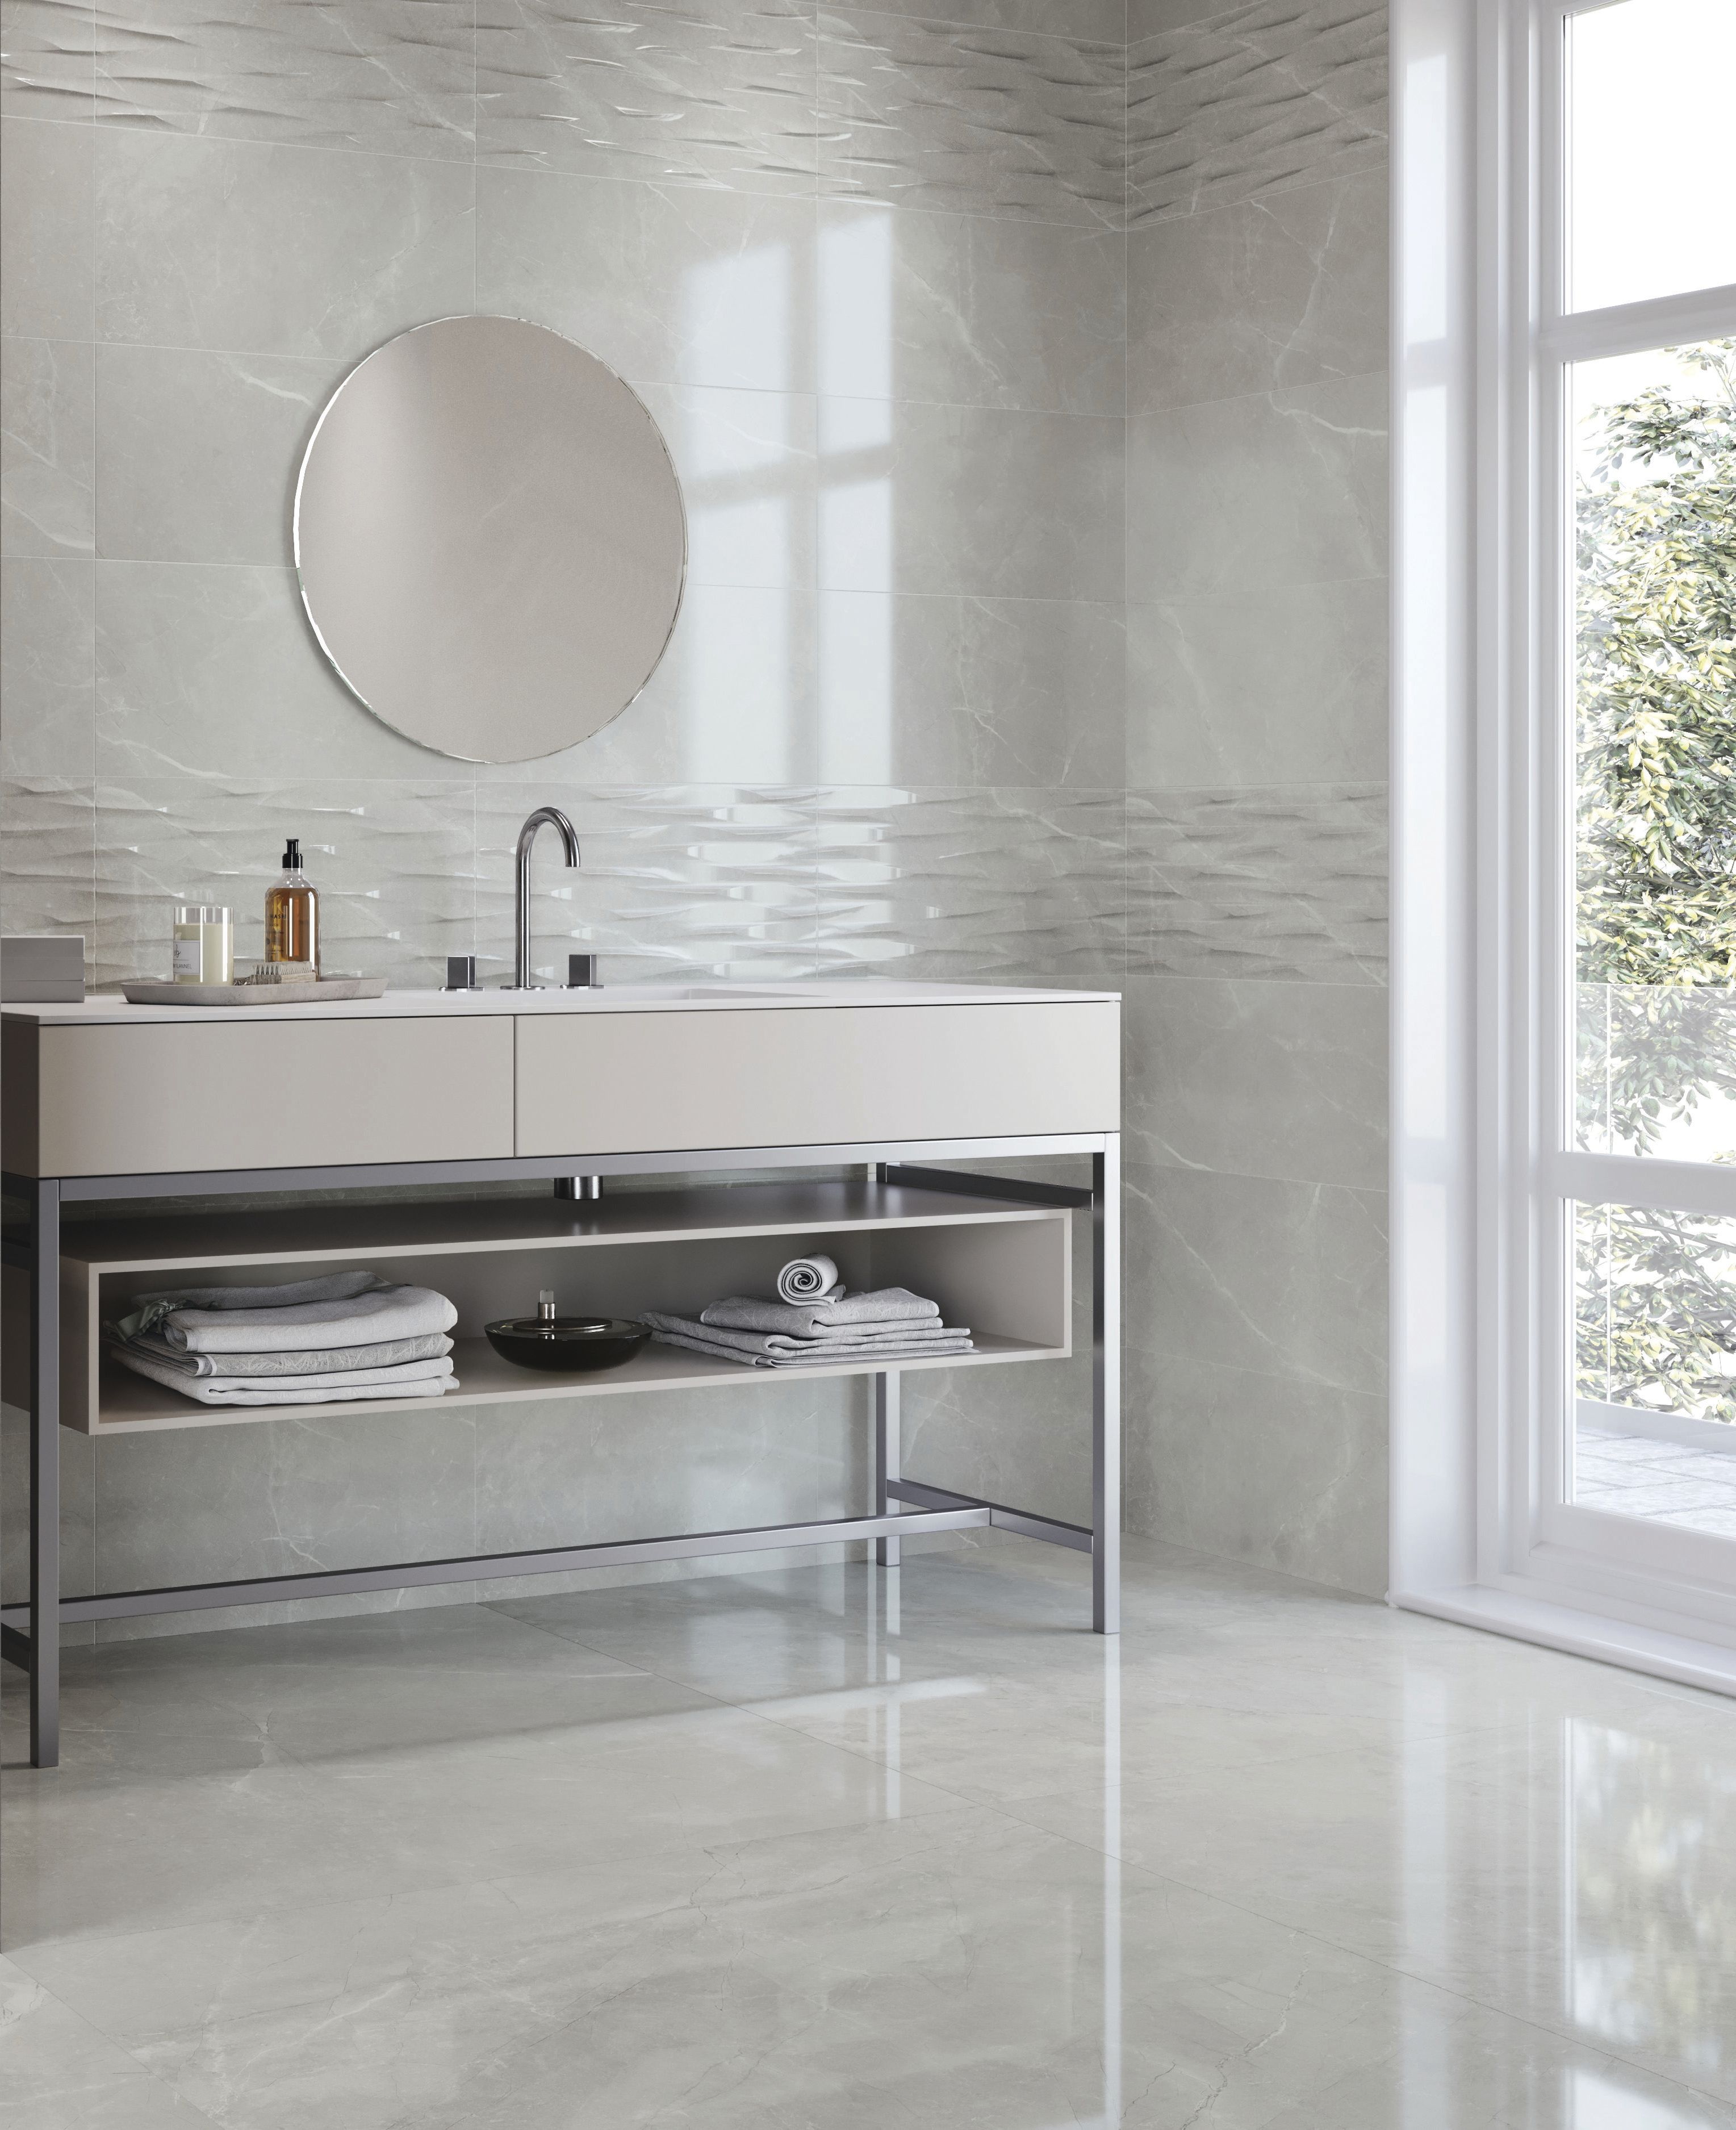 Wickes Boutique Bukan Silver Glazed Porcelain Wall & Floor Tile - 600 x 600mm